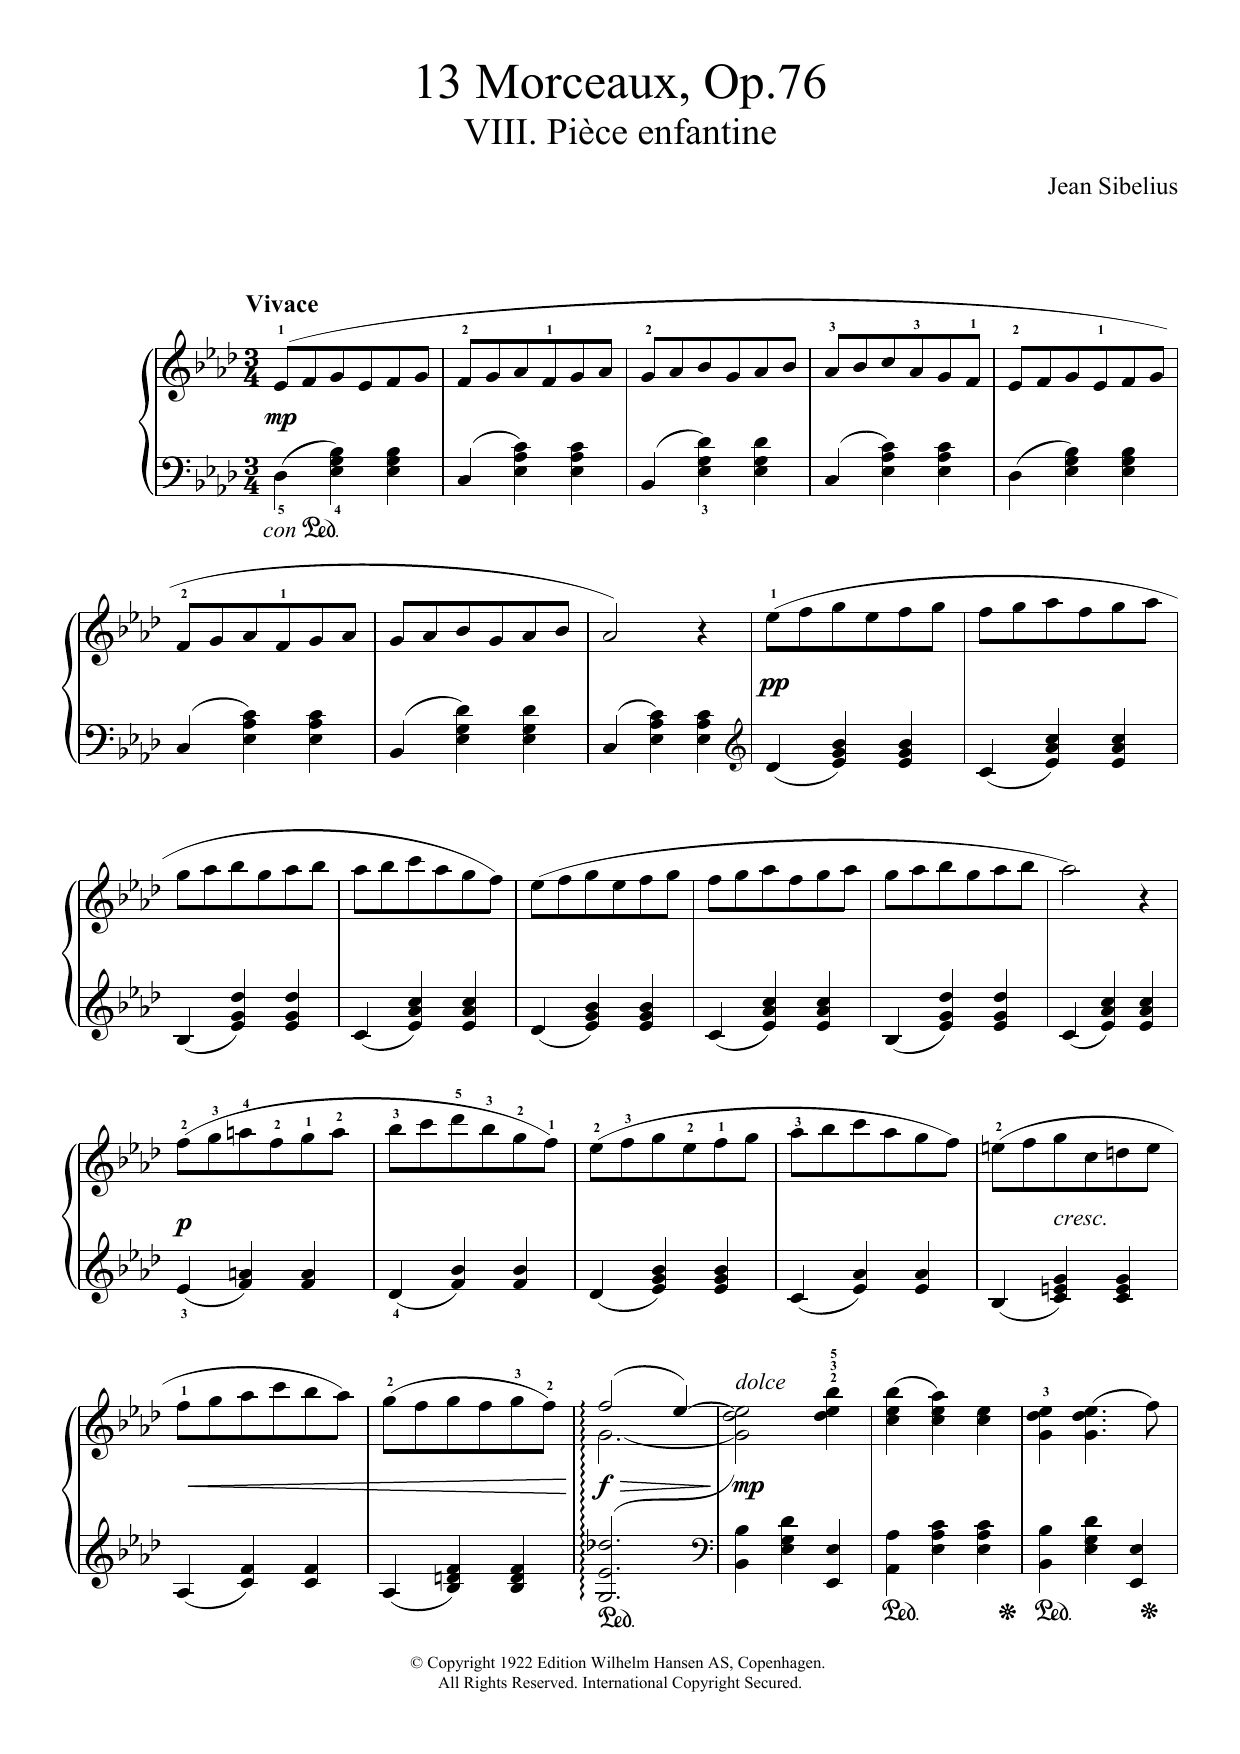 Jean Sibelius 13 Morceaux, Op.76 - VIII. Piece Enfantine Sheet Music Notes & Chords for Piano - Download or Print PDF